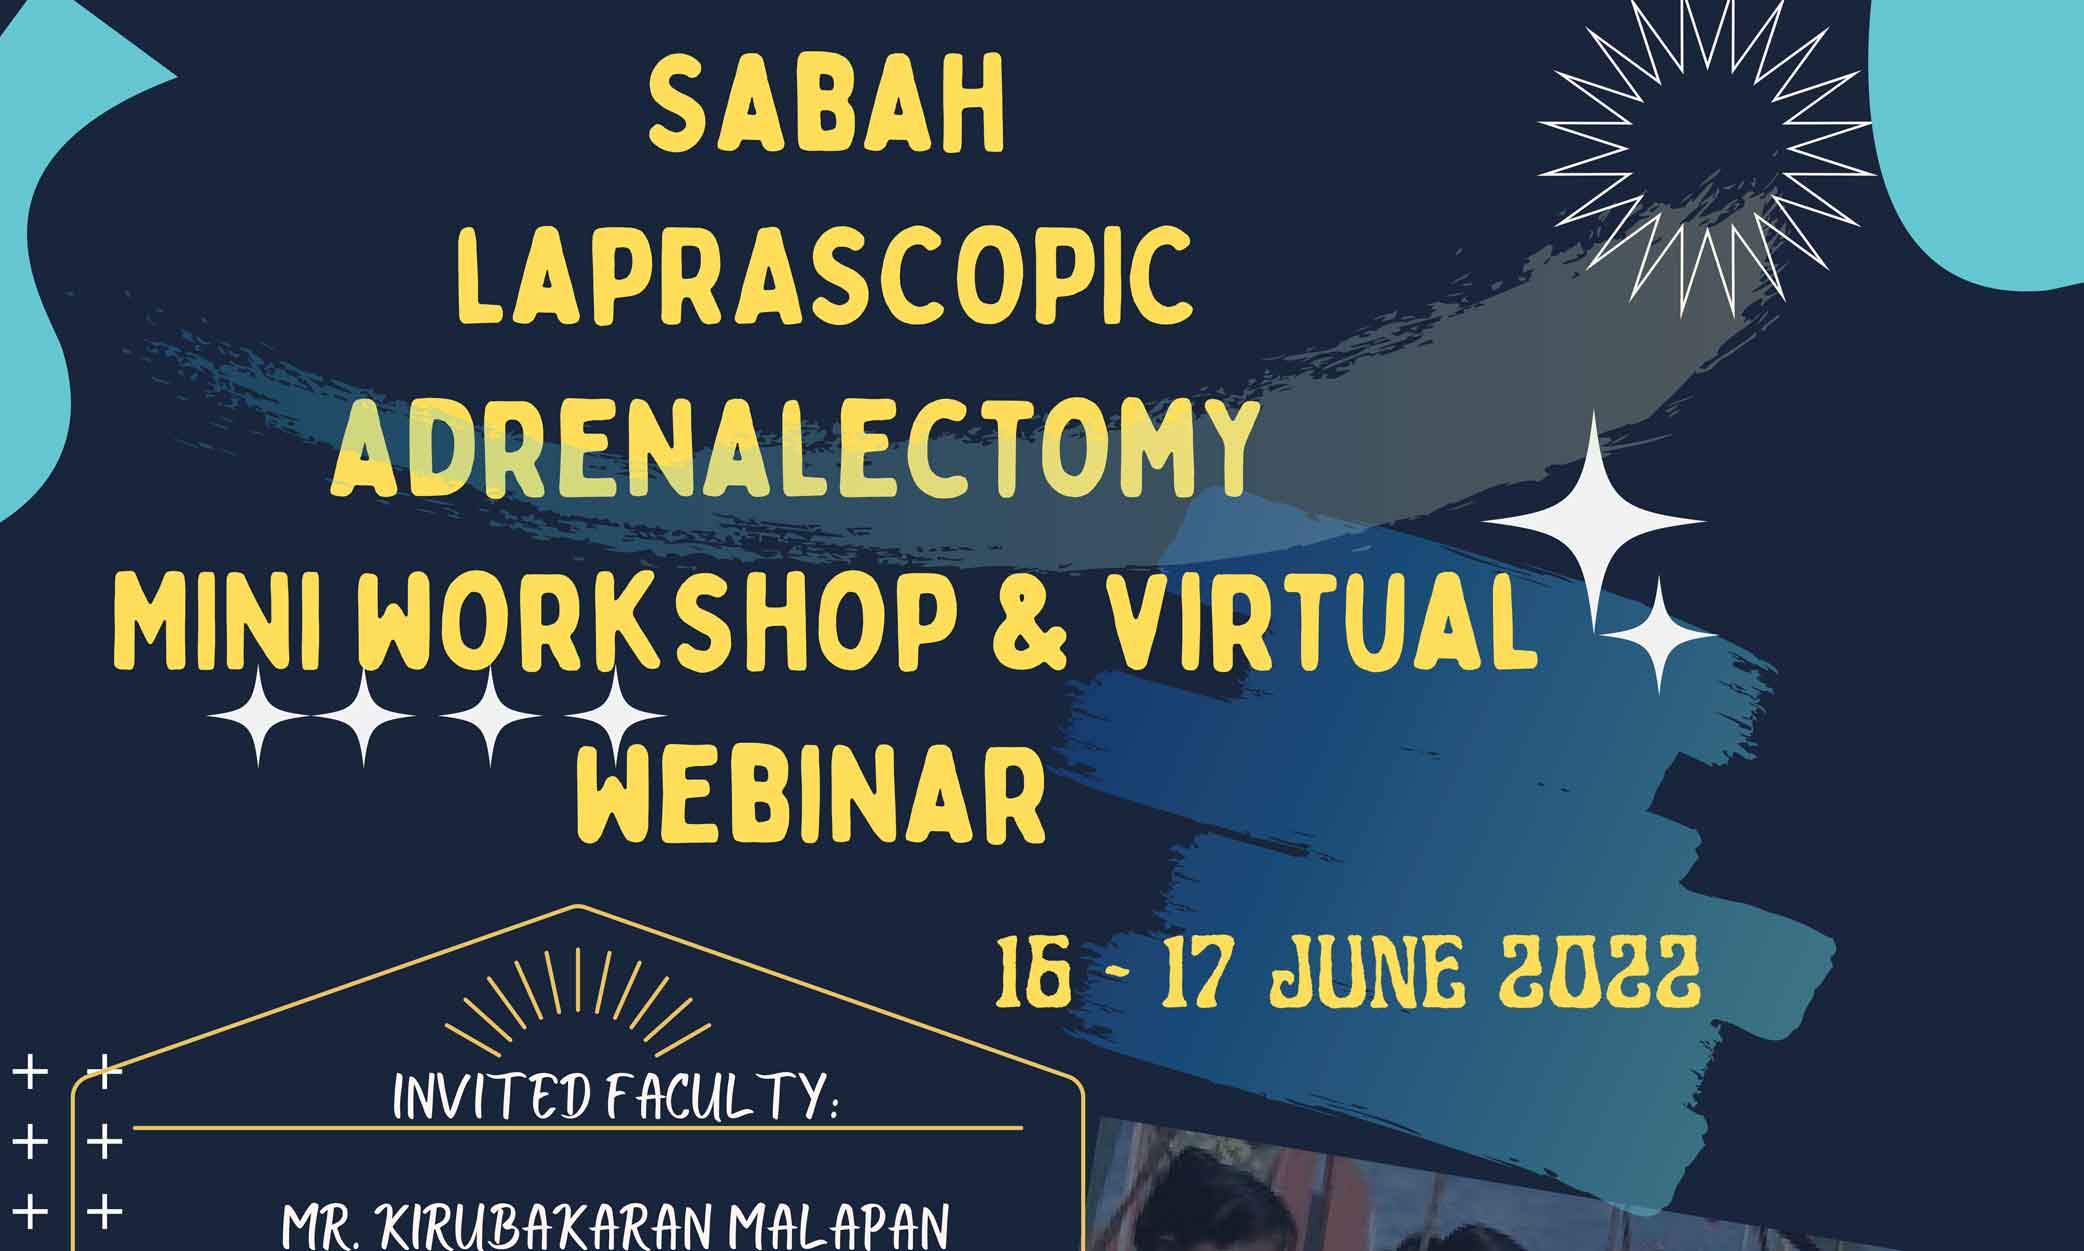 Sabah Laparoscopic Adrenalectomy Mini Workshop and Virtual Webinar. Poster latest 